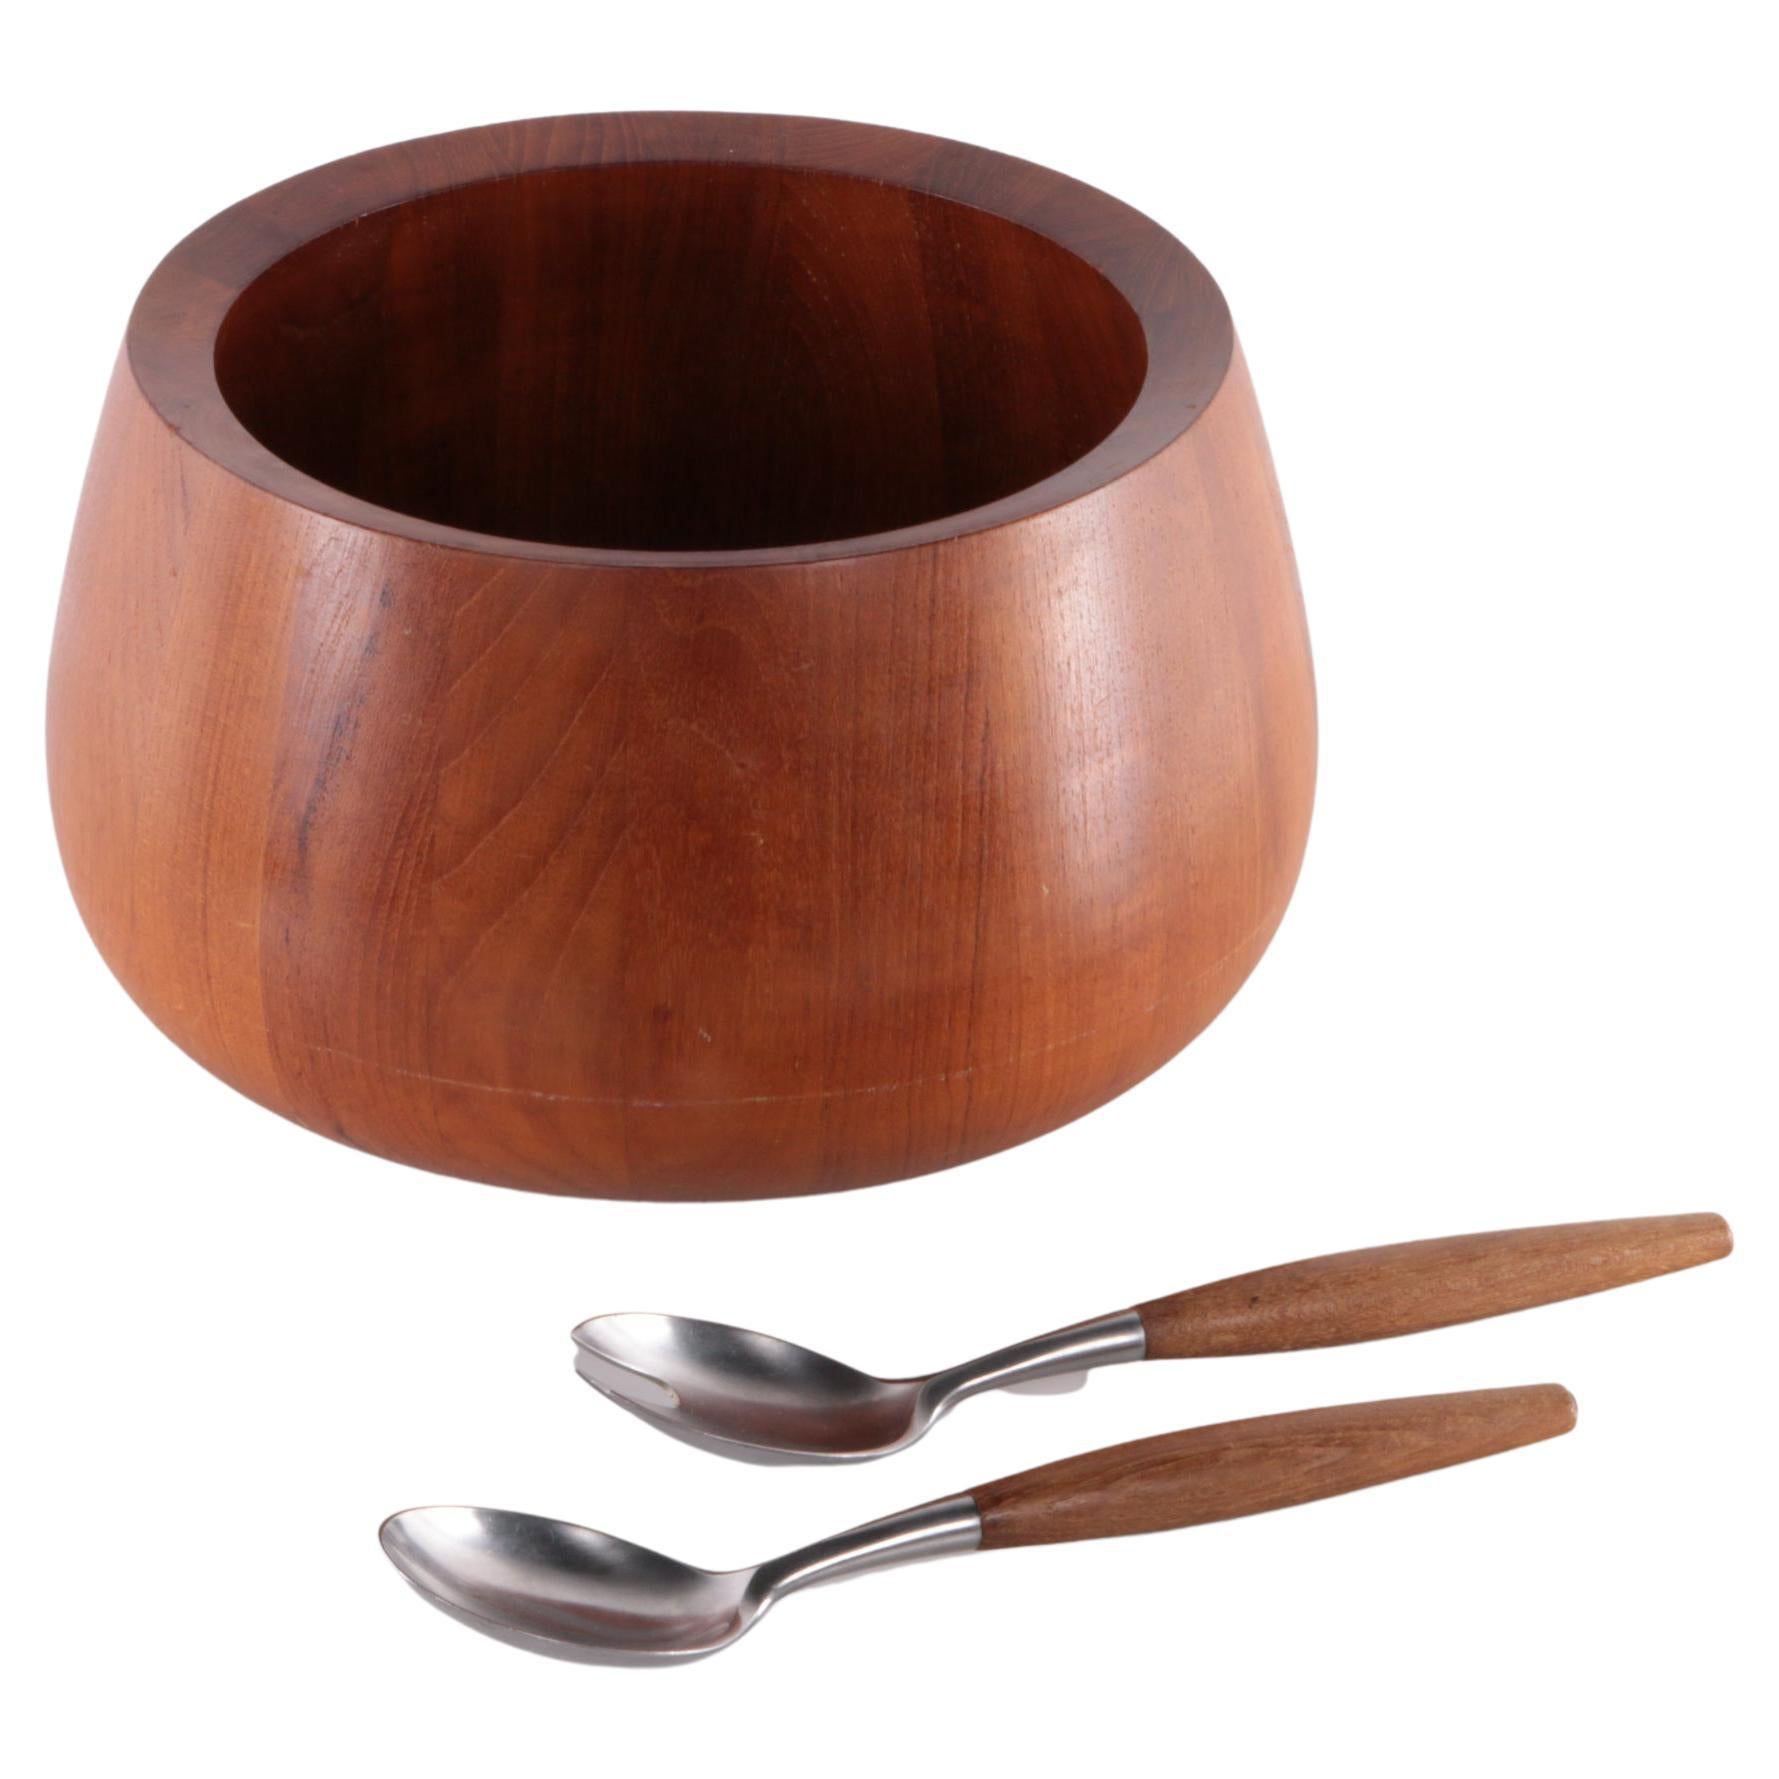 Jens Quistgaard Teak Wooden Bowl with Salad Cutlery by Dansk Design